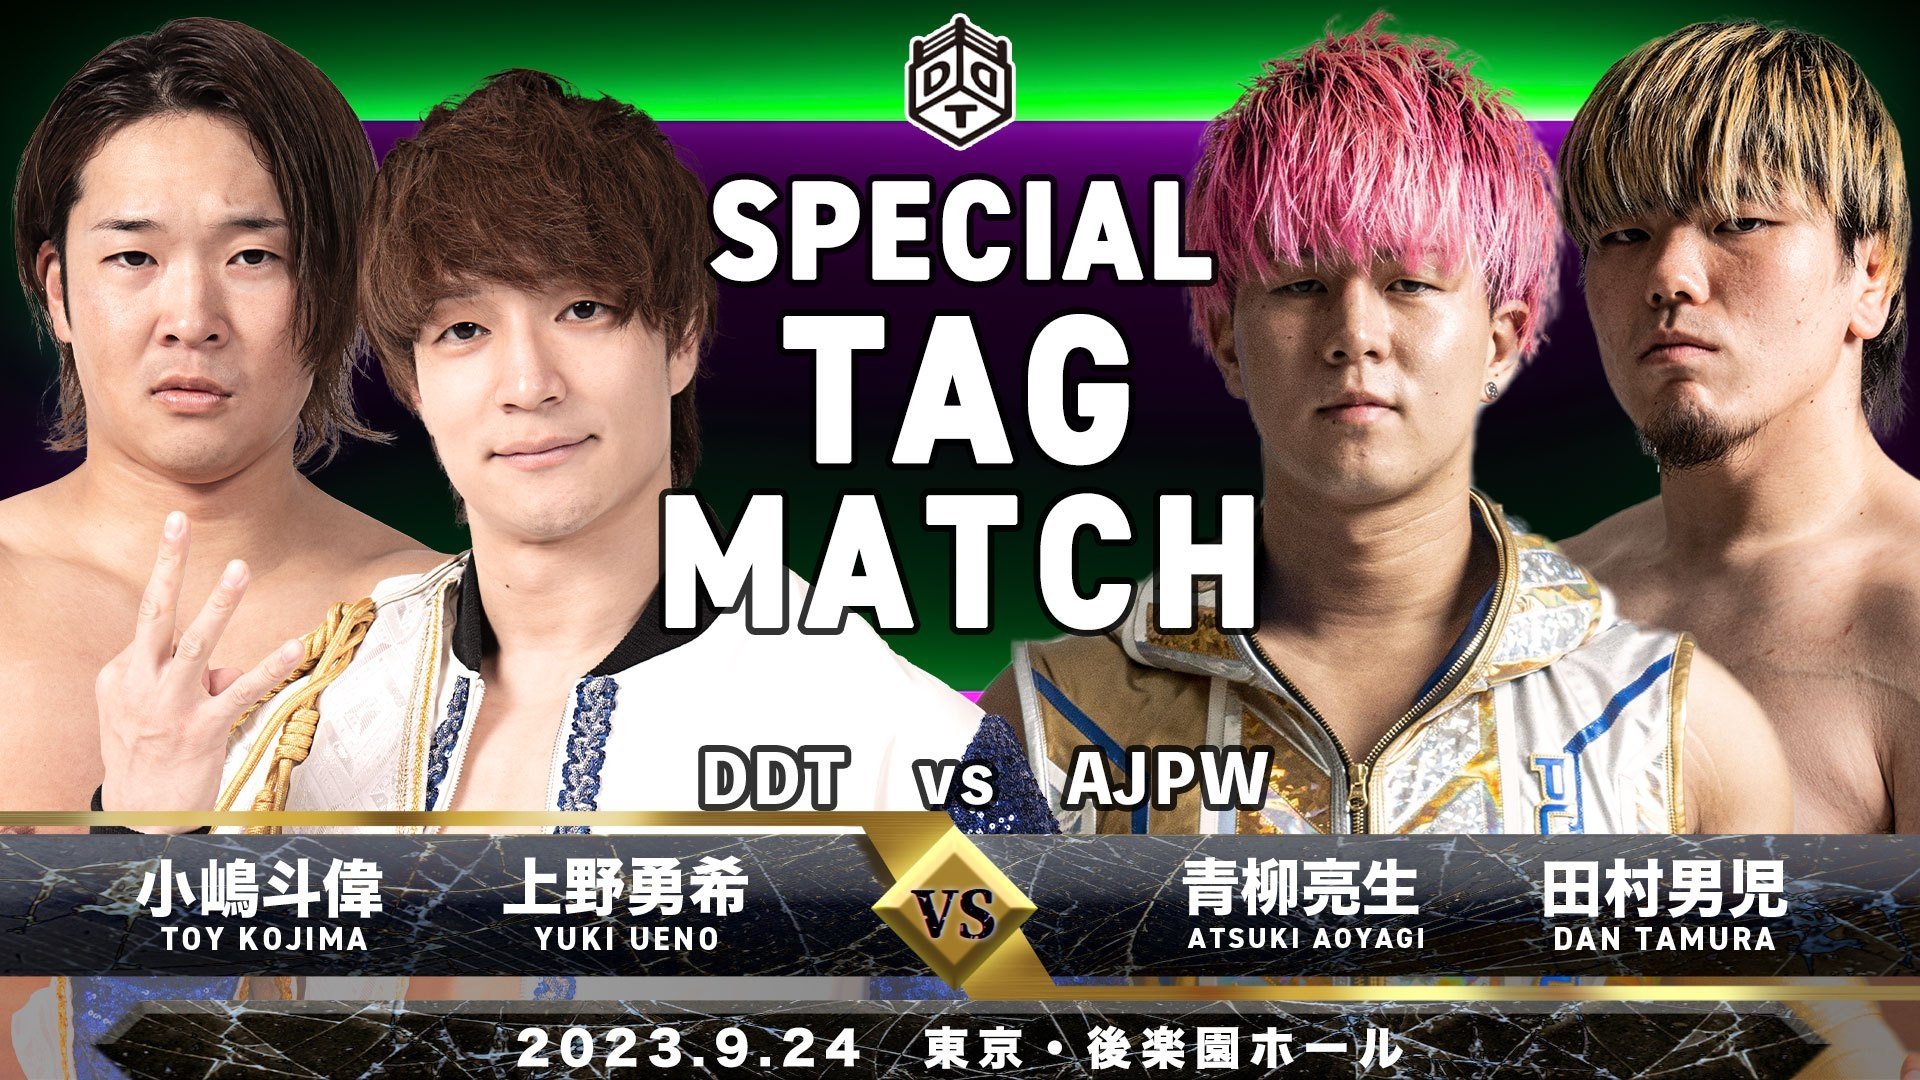 Yuki Ueno & Toy Kojima Defeat Atsuki Aoyagi & Dan Tamura in DDT Pro vs AJPW Showdown